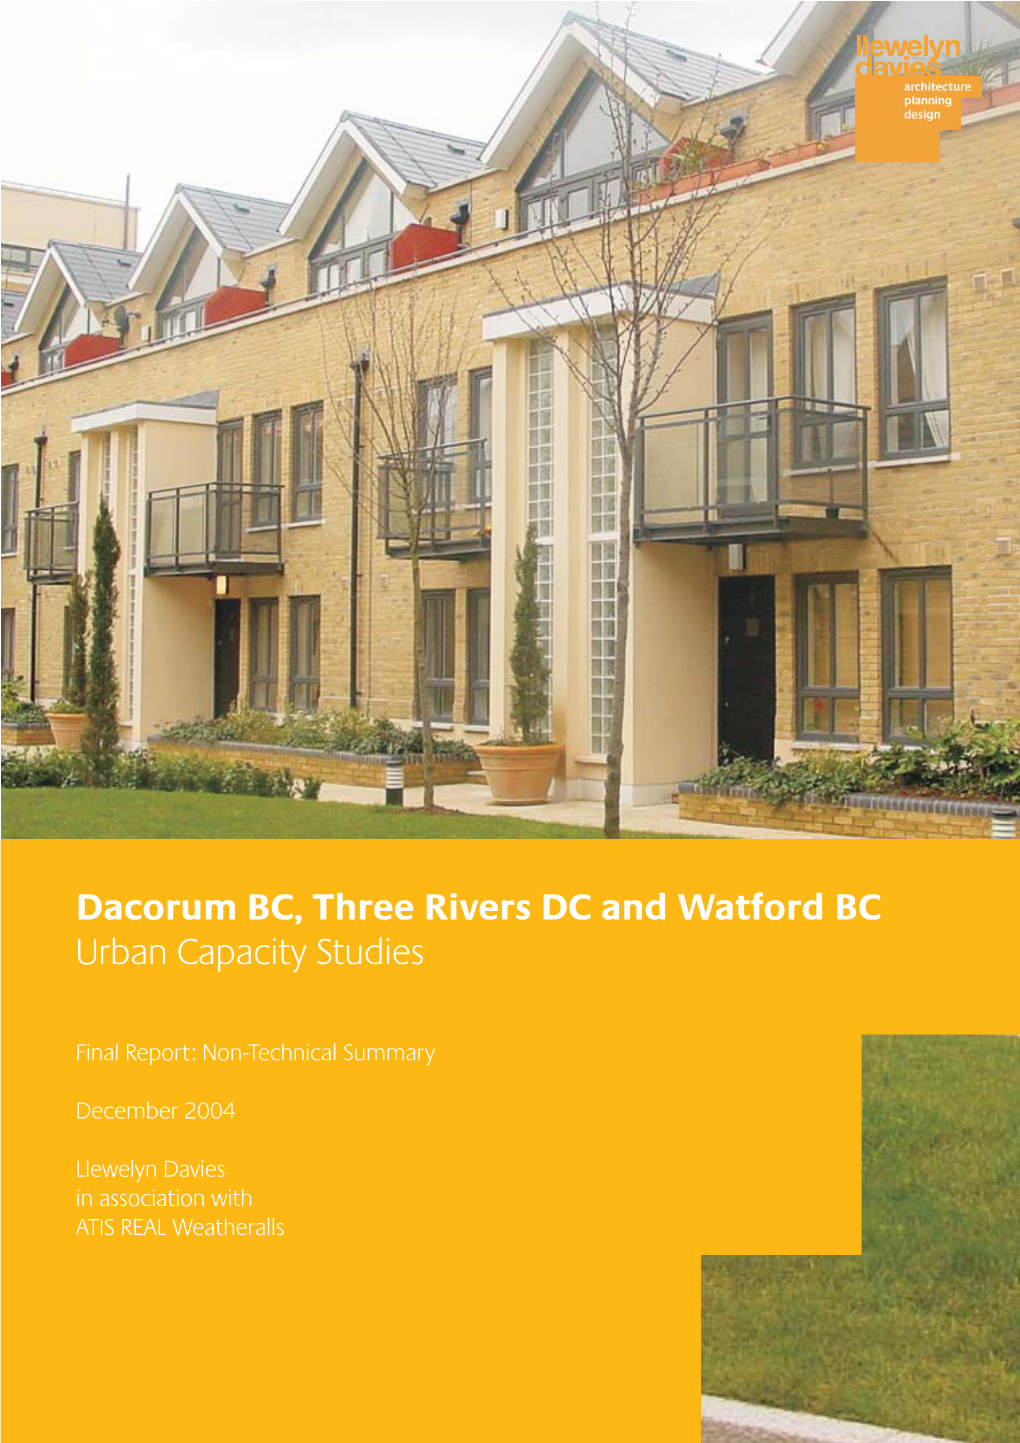 Dacorum BC, Three Rivers DC and Watford BC Urban Capacity Studies